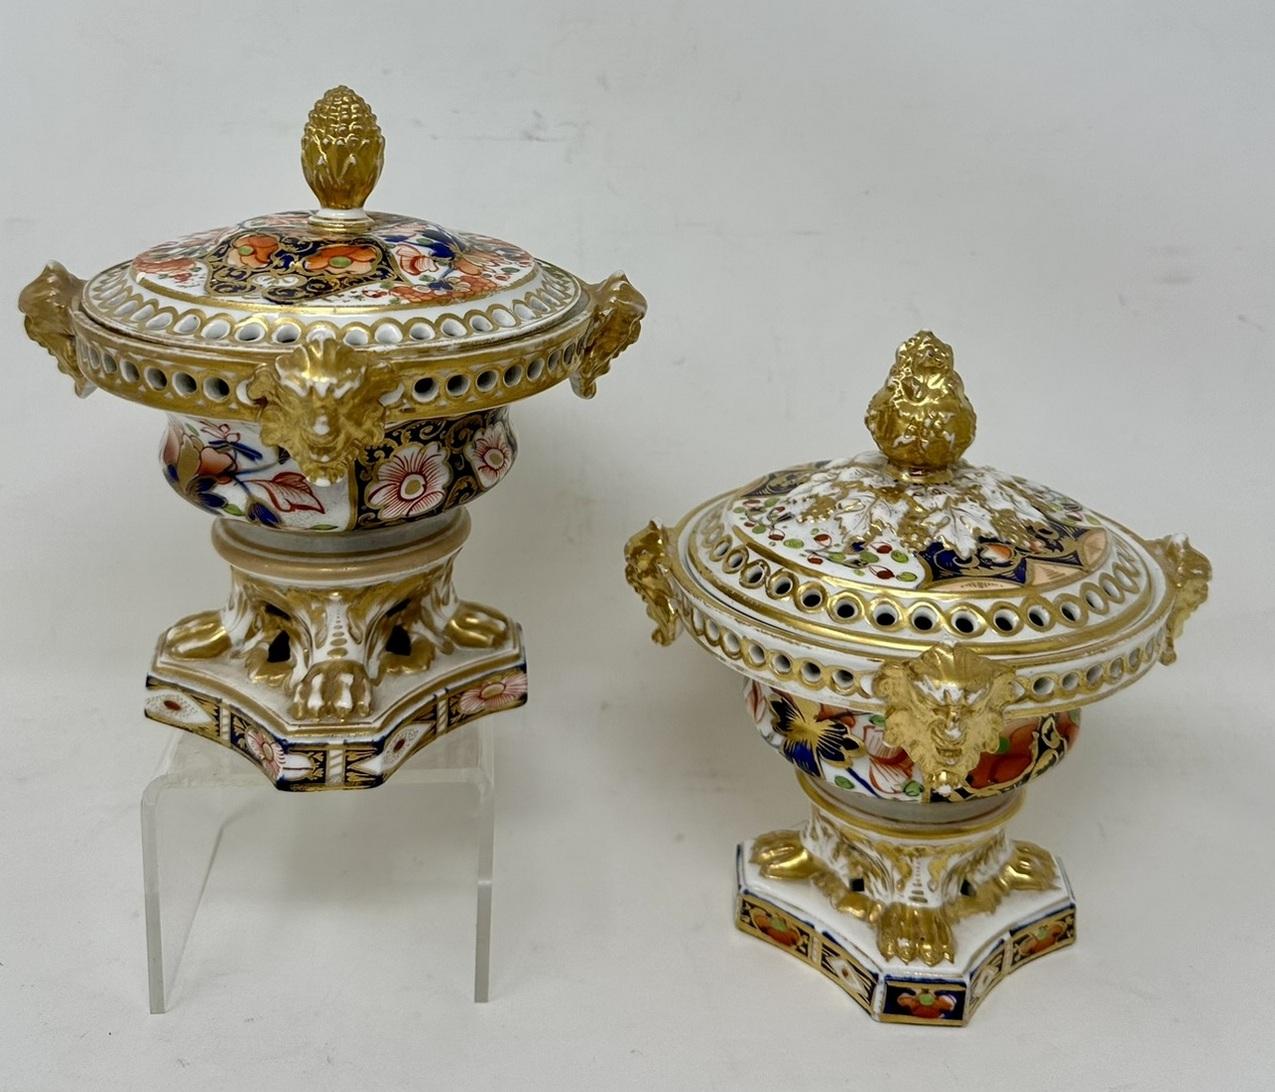 Antique Regency English Crown Derby Pair Urns Vases Pot Pourri Centerpieces 1815 In Good Condition For Sale In Dublin, Ireland